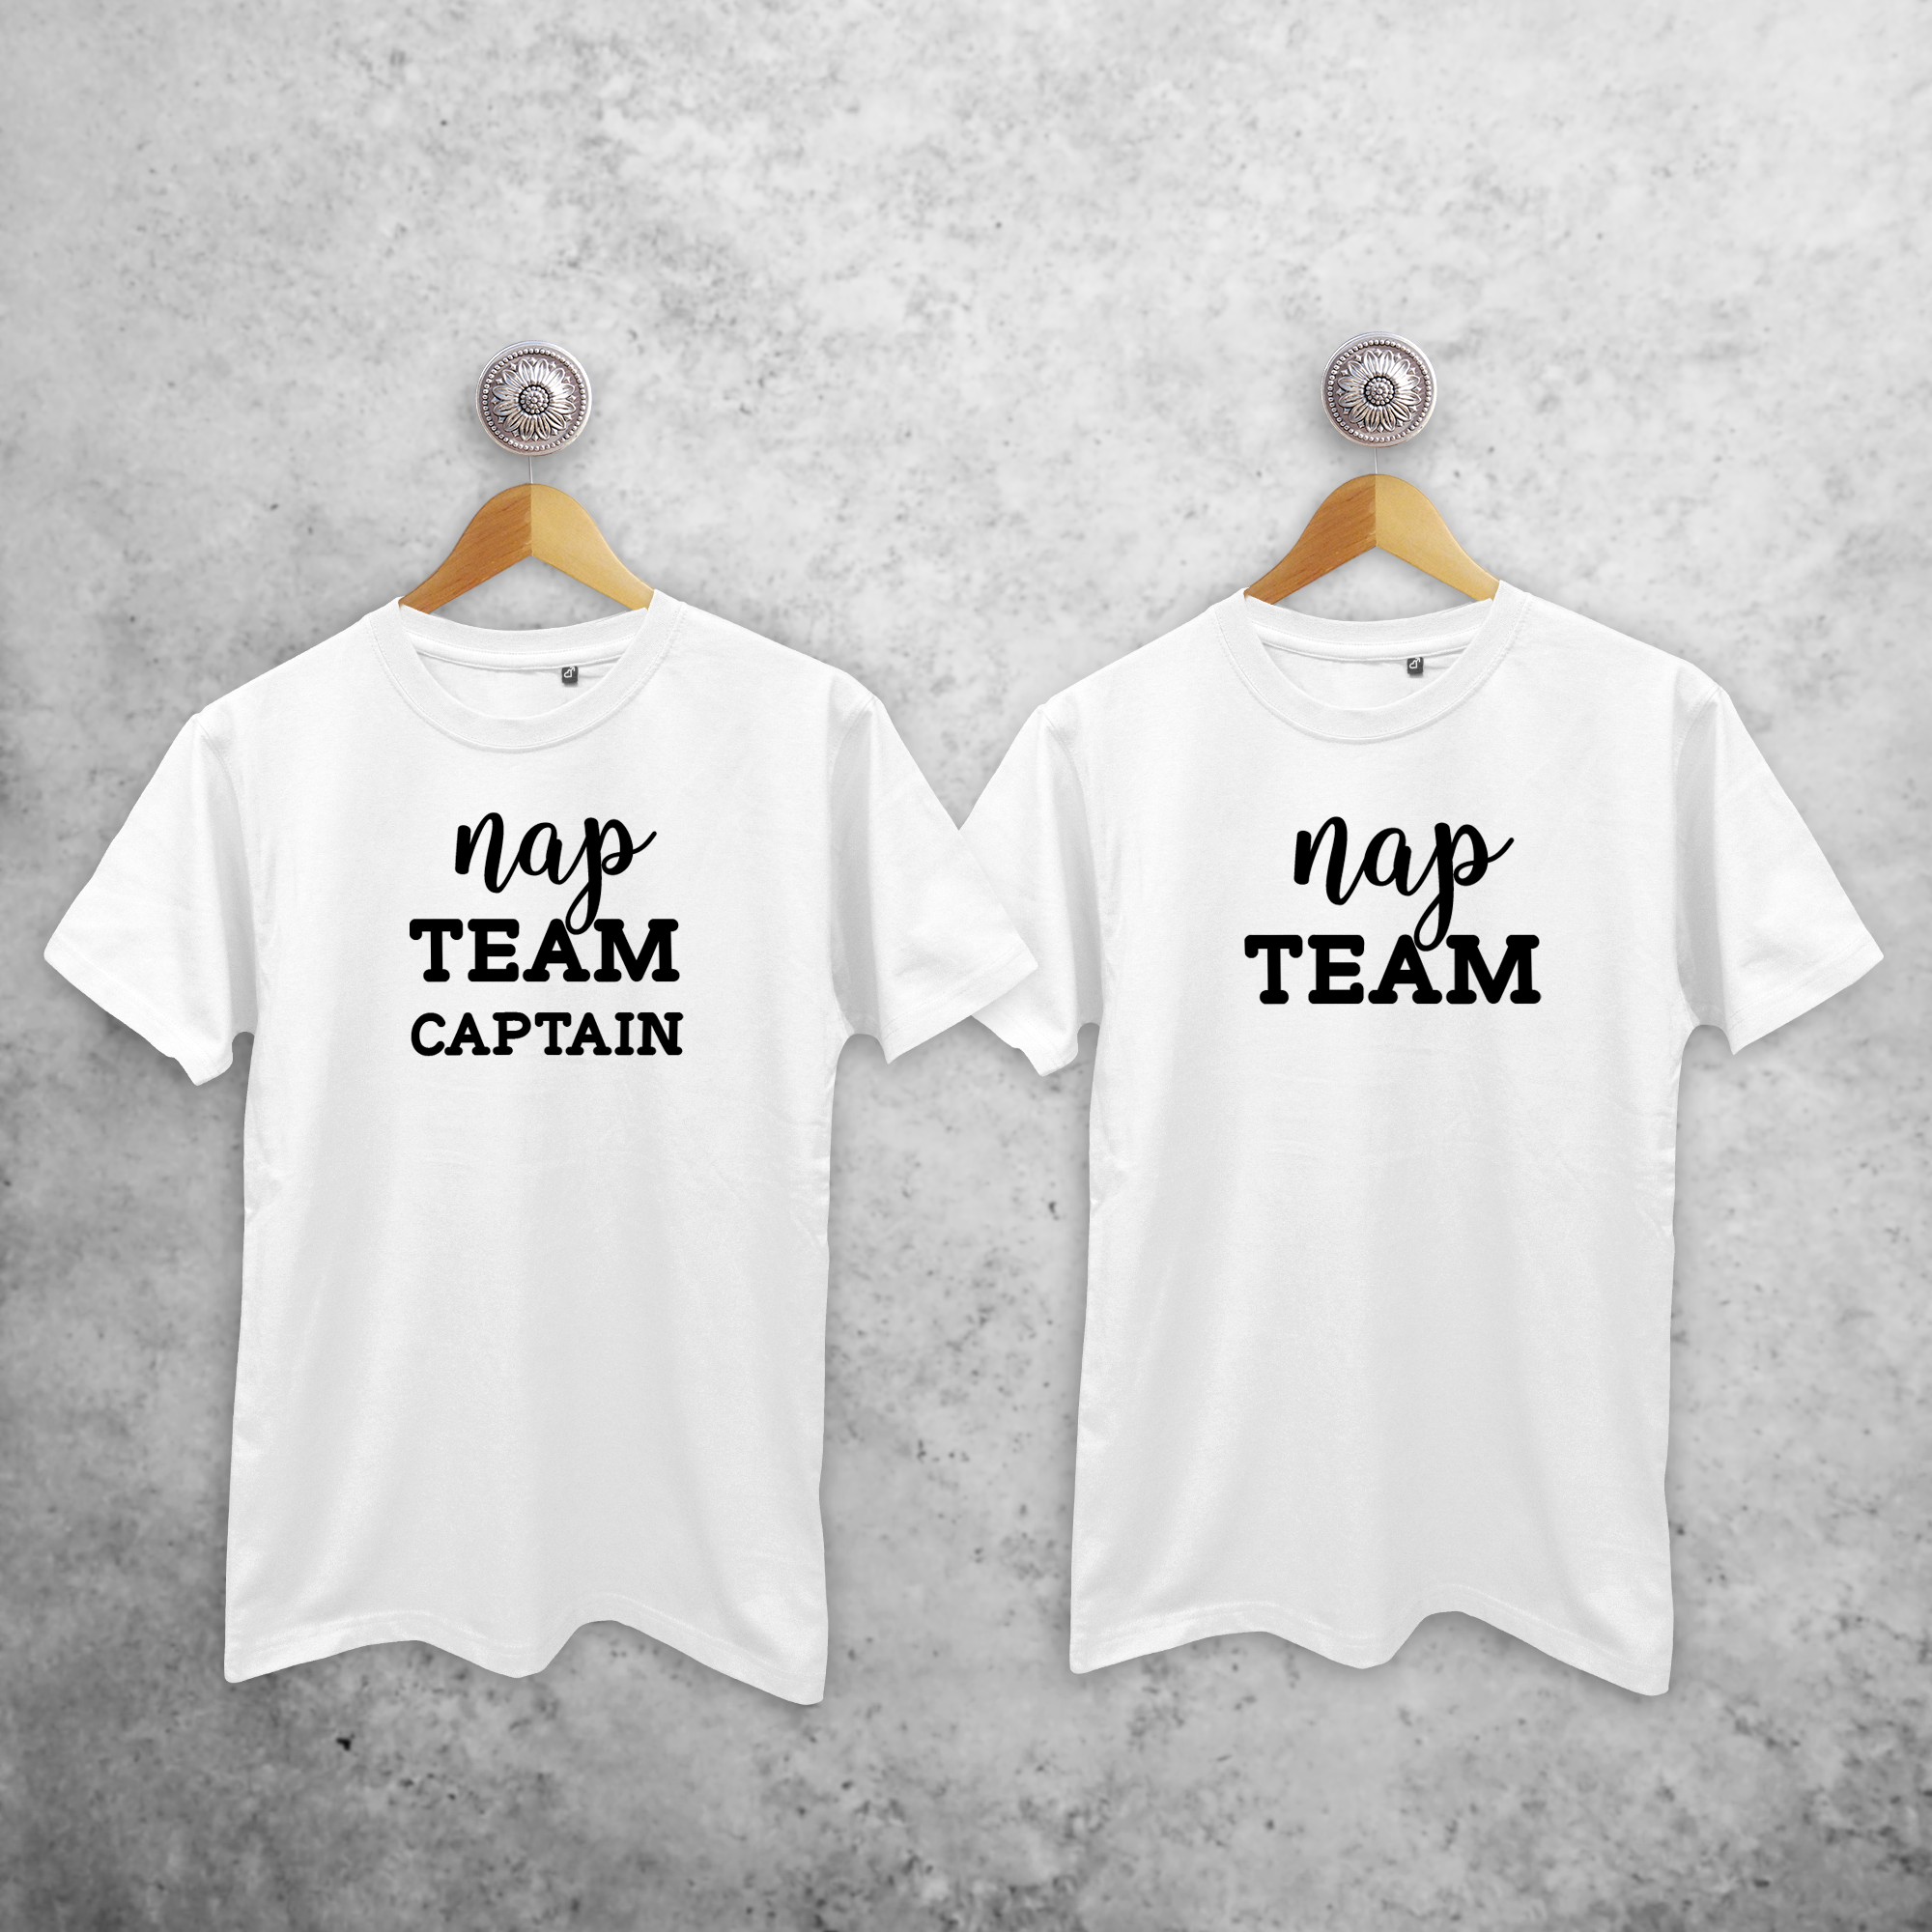 'Nap team captain' & 'Nap team' couples shirts